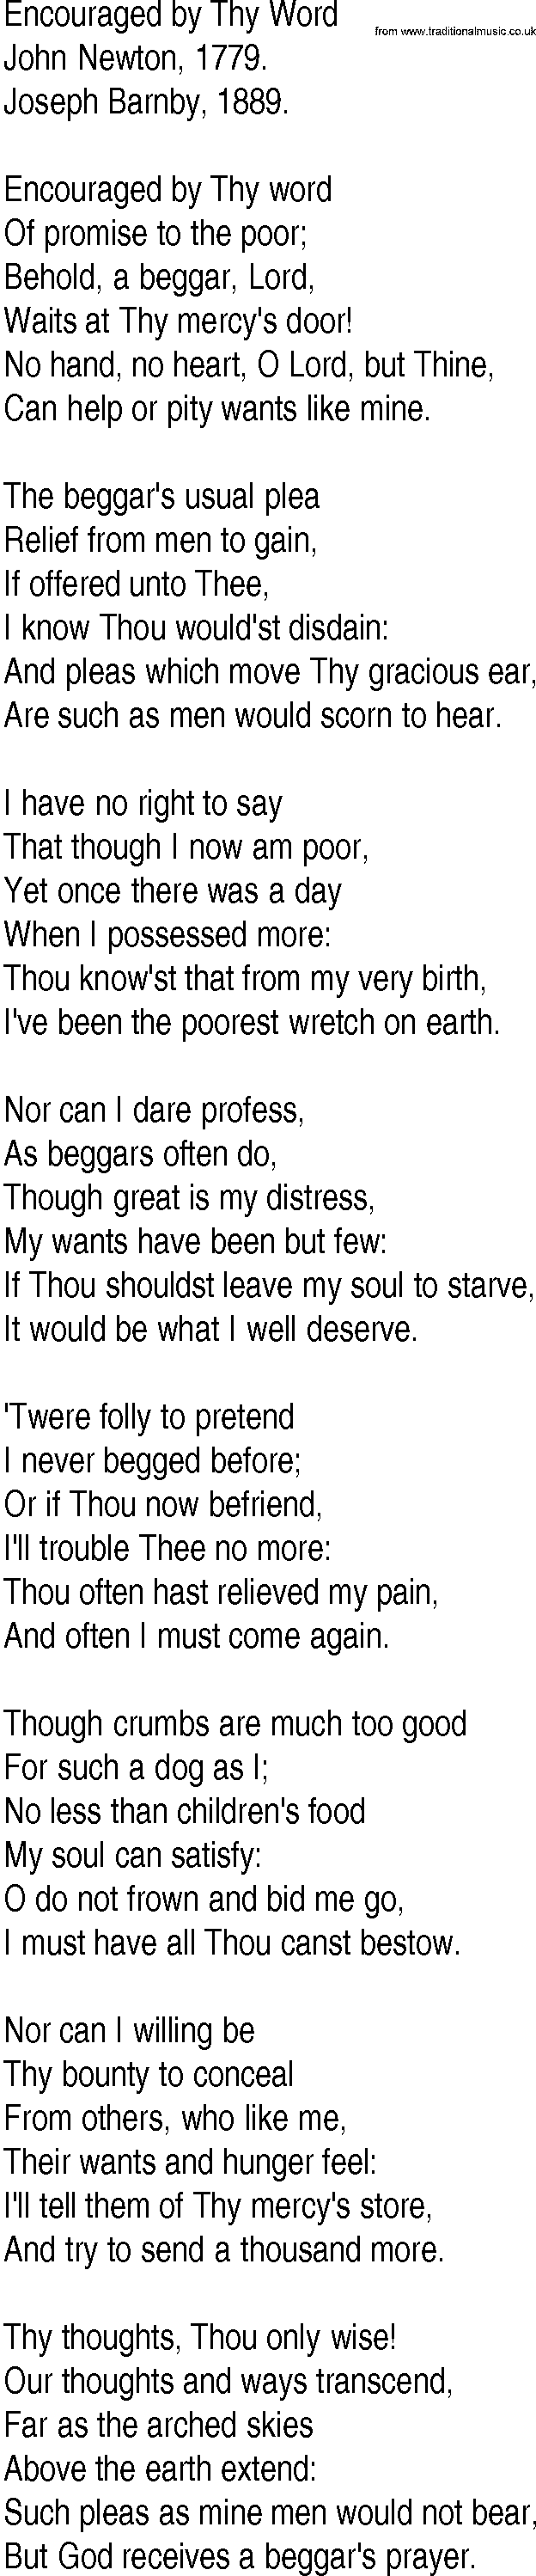 Hymn and Gospel Song: Encouraged by Thy Word by John Newton lyrics